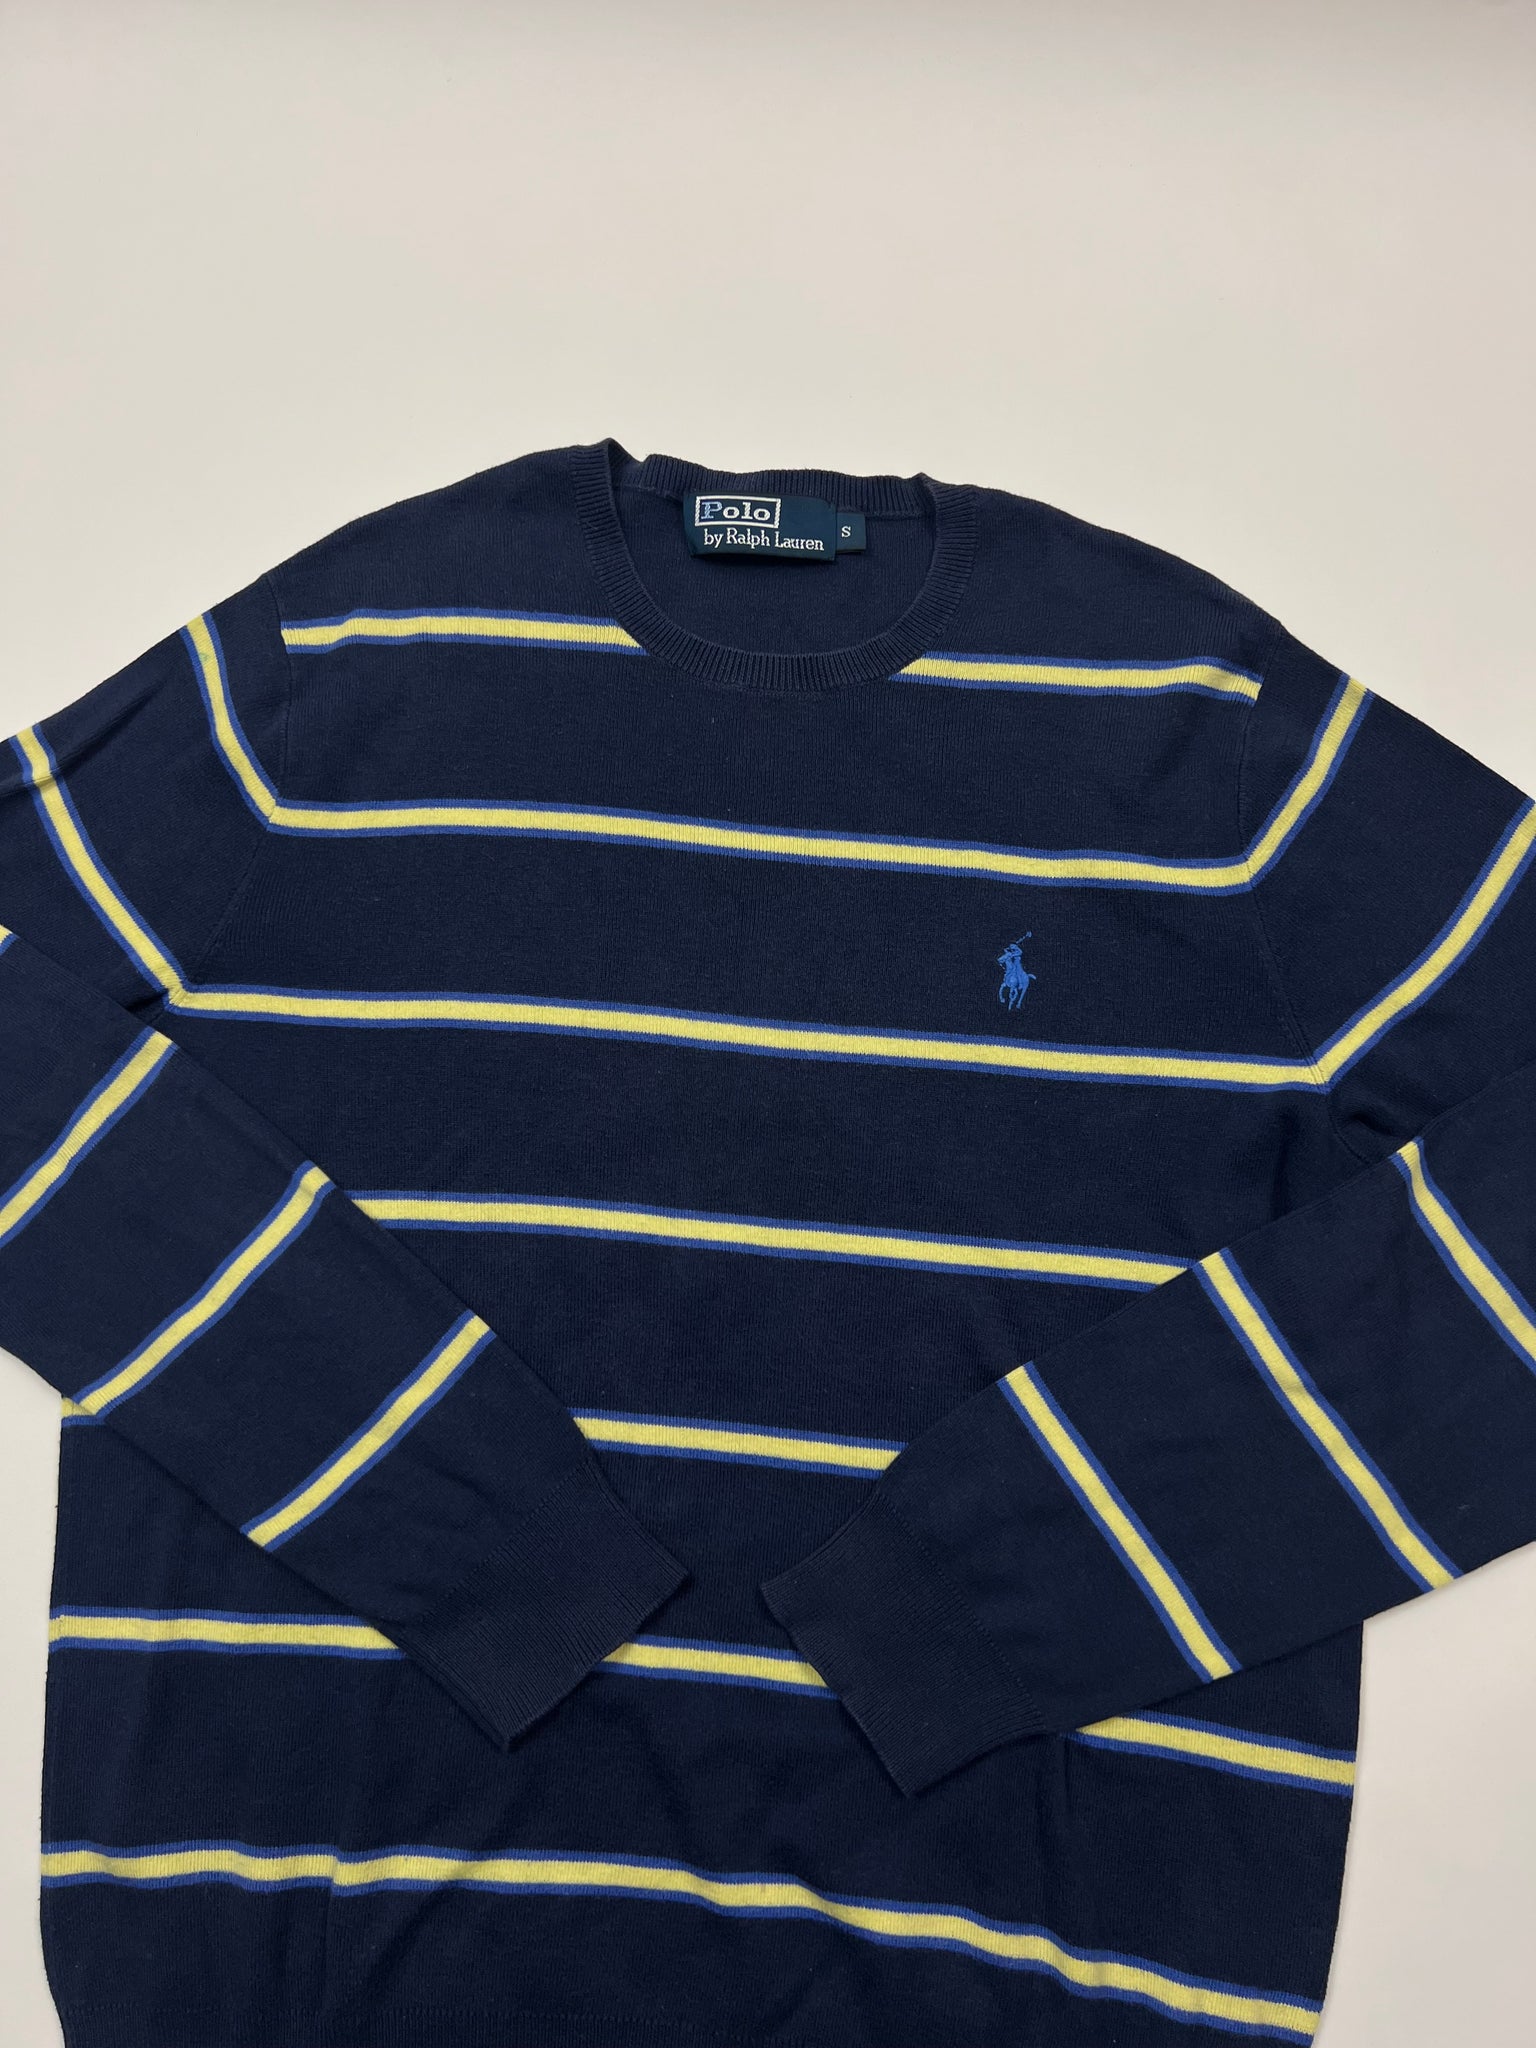 Polo Ralph Lauren Sweater (S)